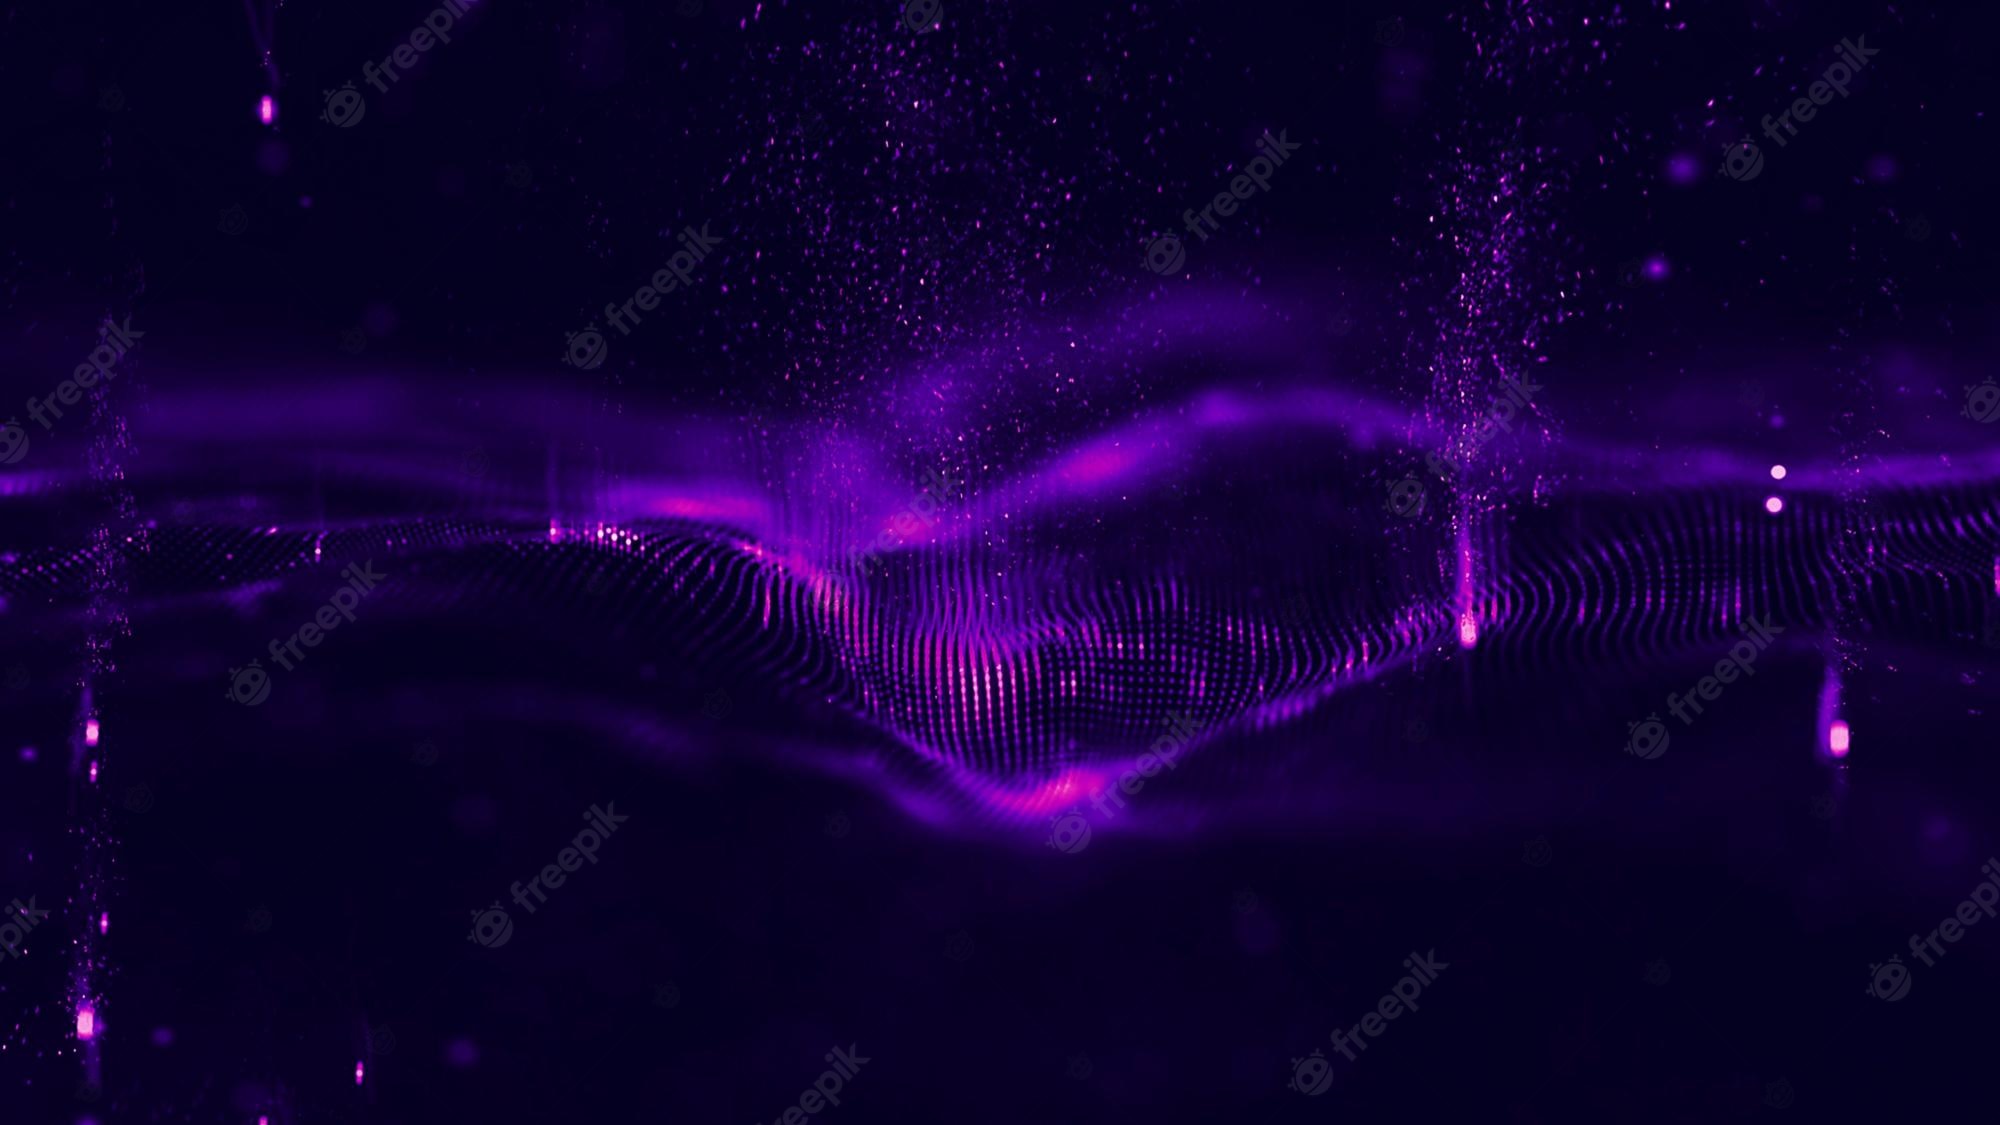 Premium Photo Wave abstract purple wave animation seamless loop